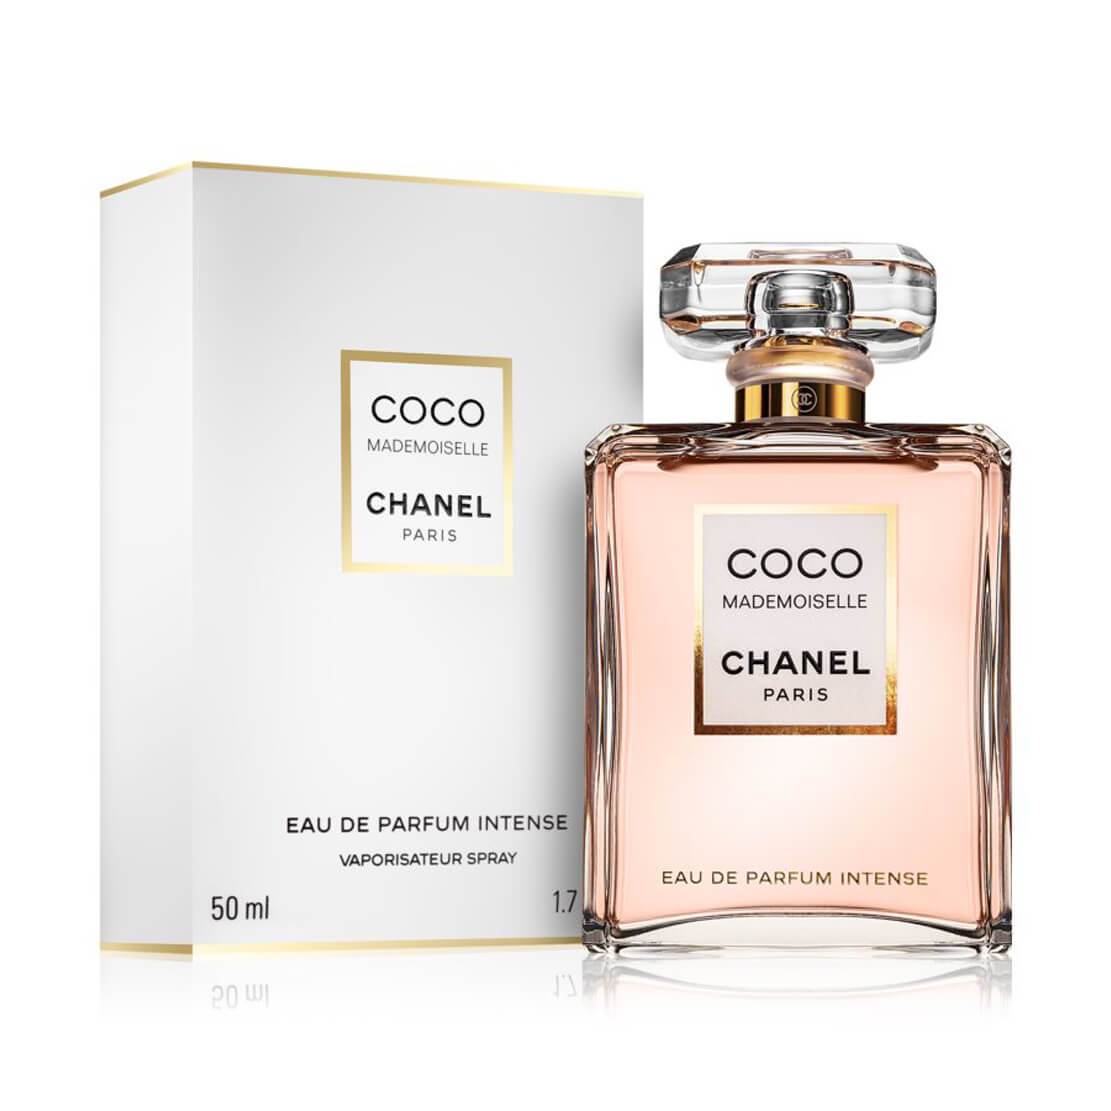 Chanel Coco Mademoiselle EDP Intense 50ml - Intoxicating Women's Perfume